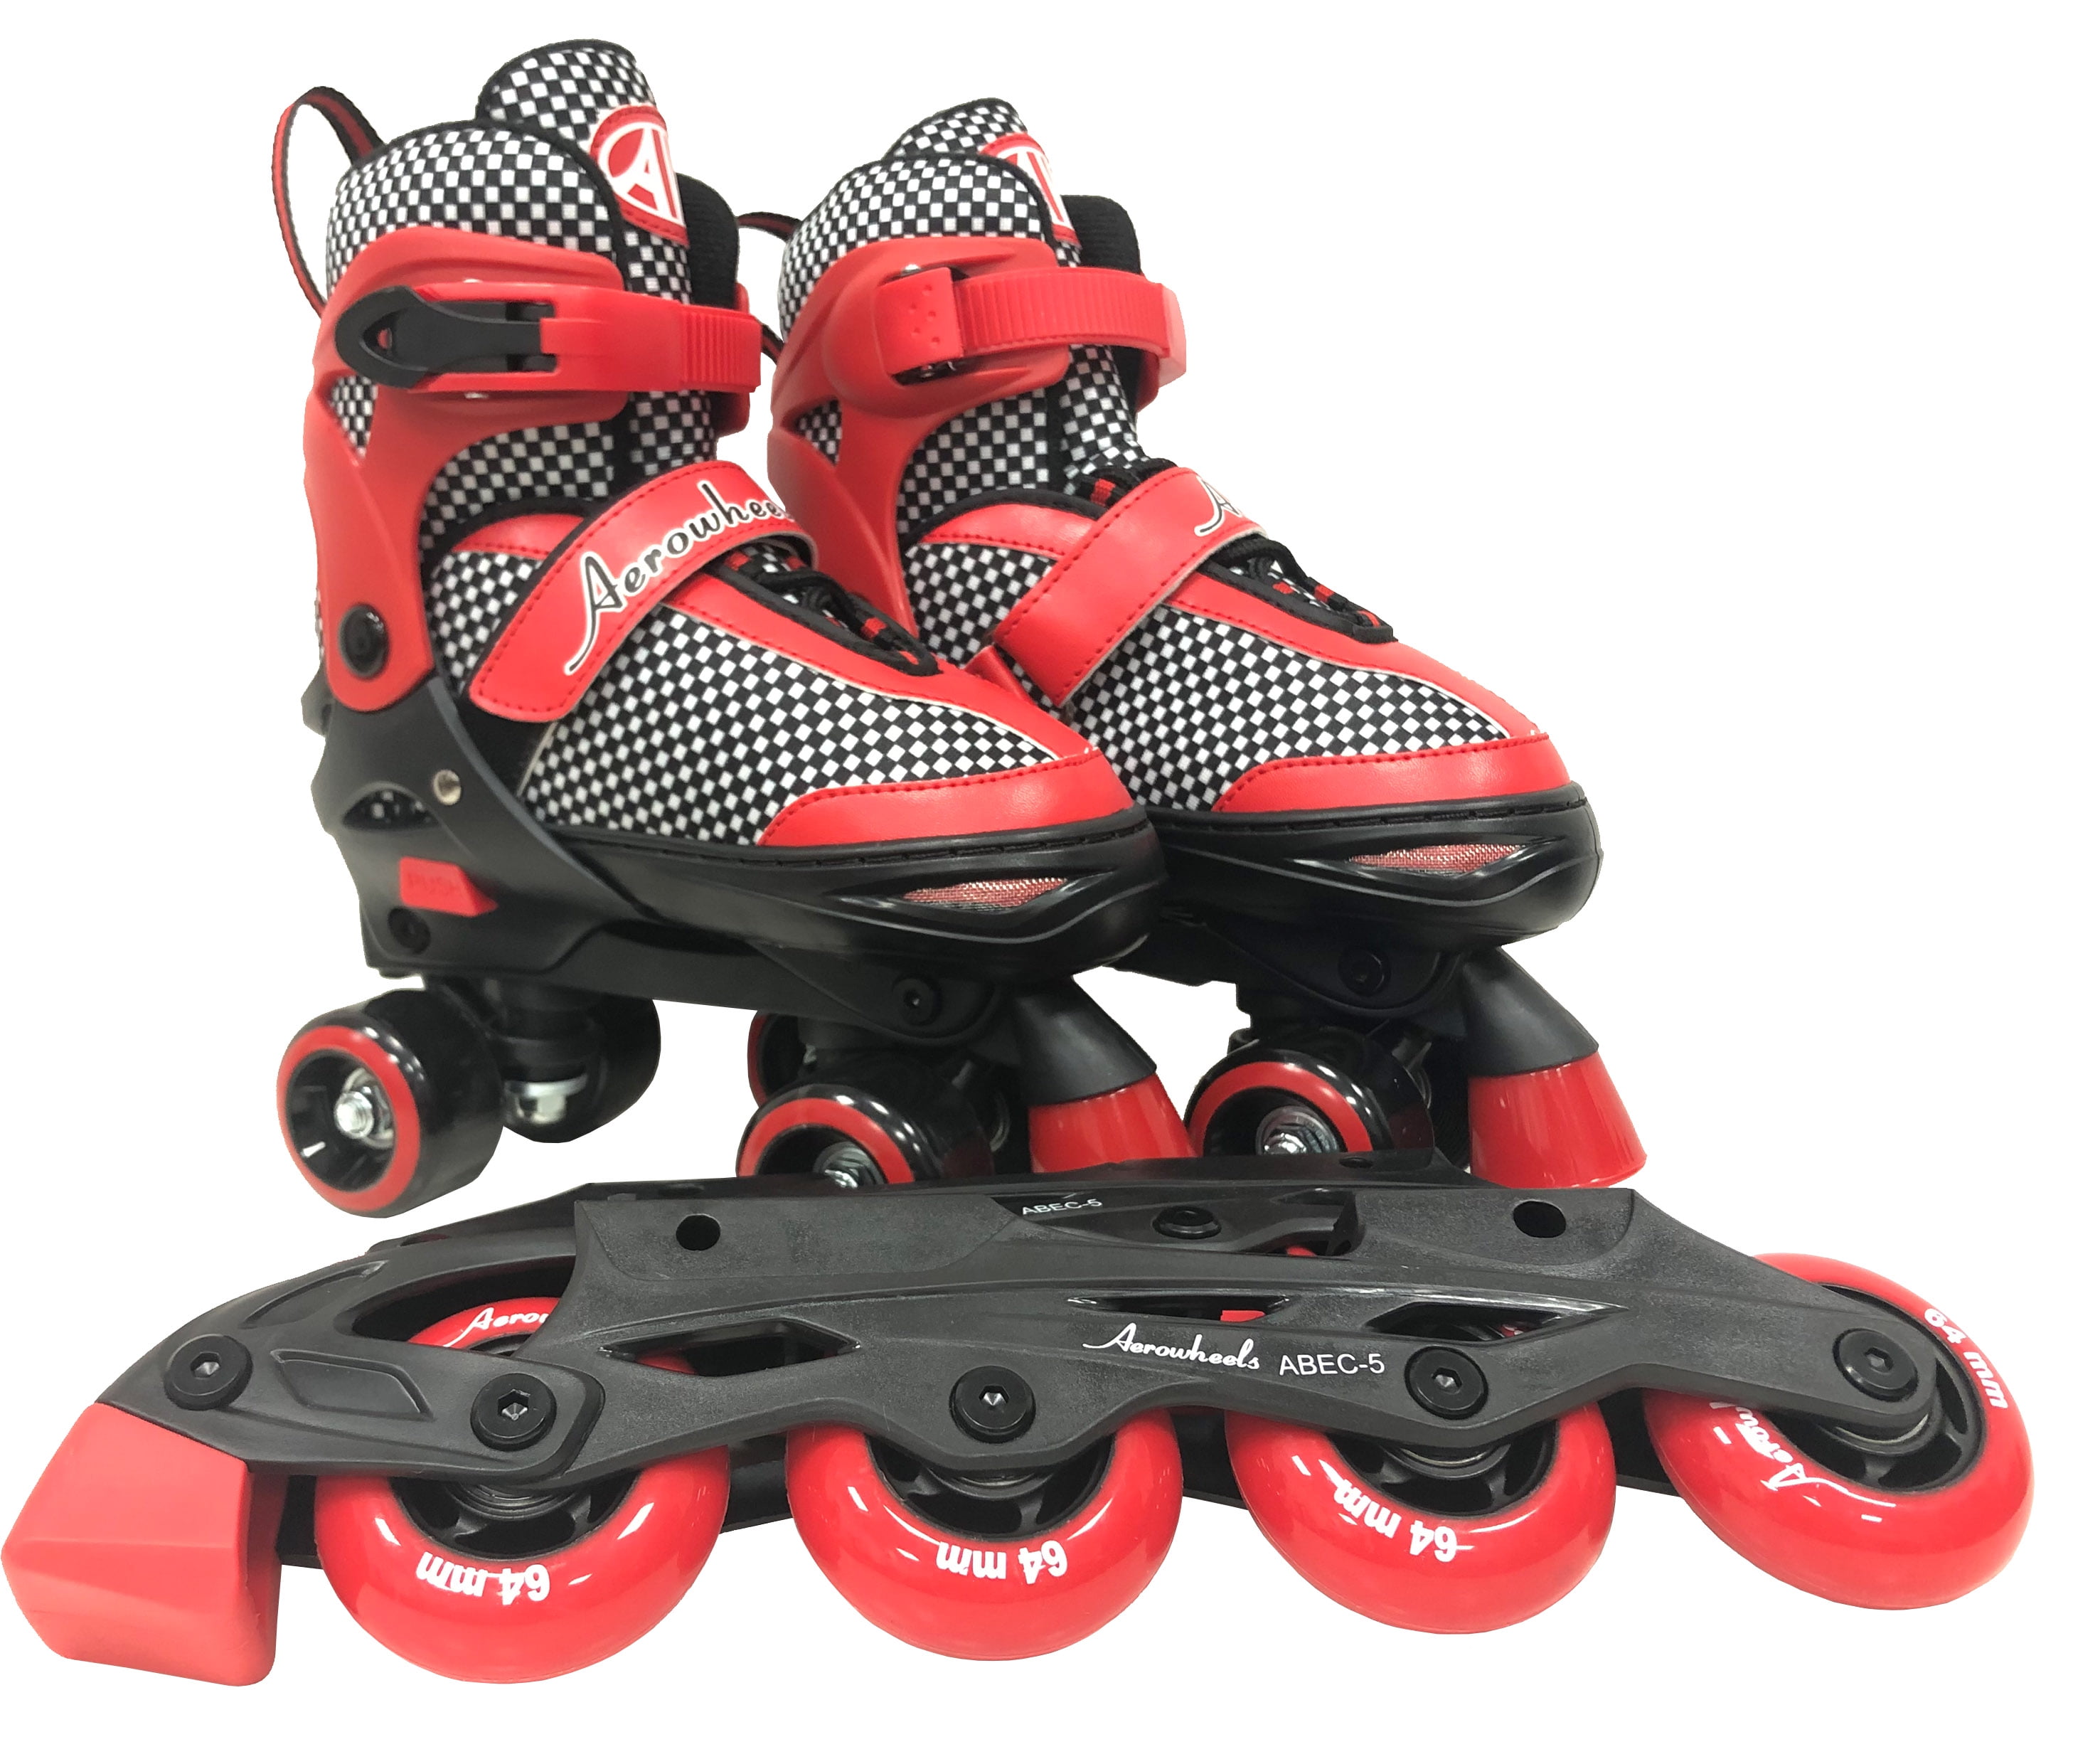 Aerowheels Quad Youth Adjustable Skates Size 1-4 Age 5 for sale online 